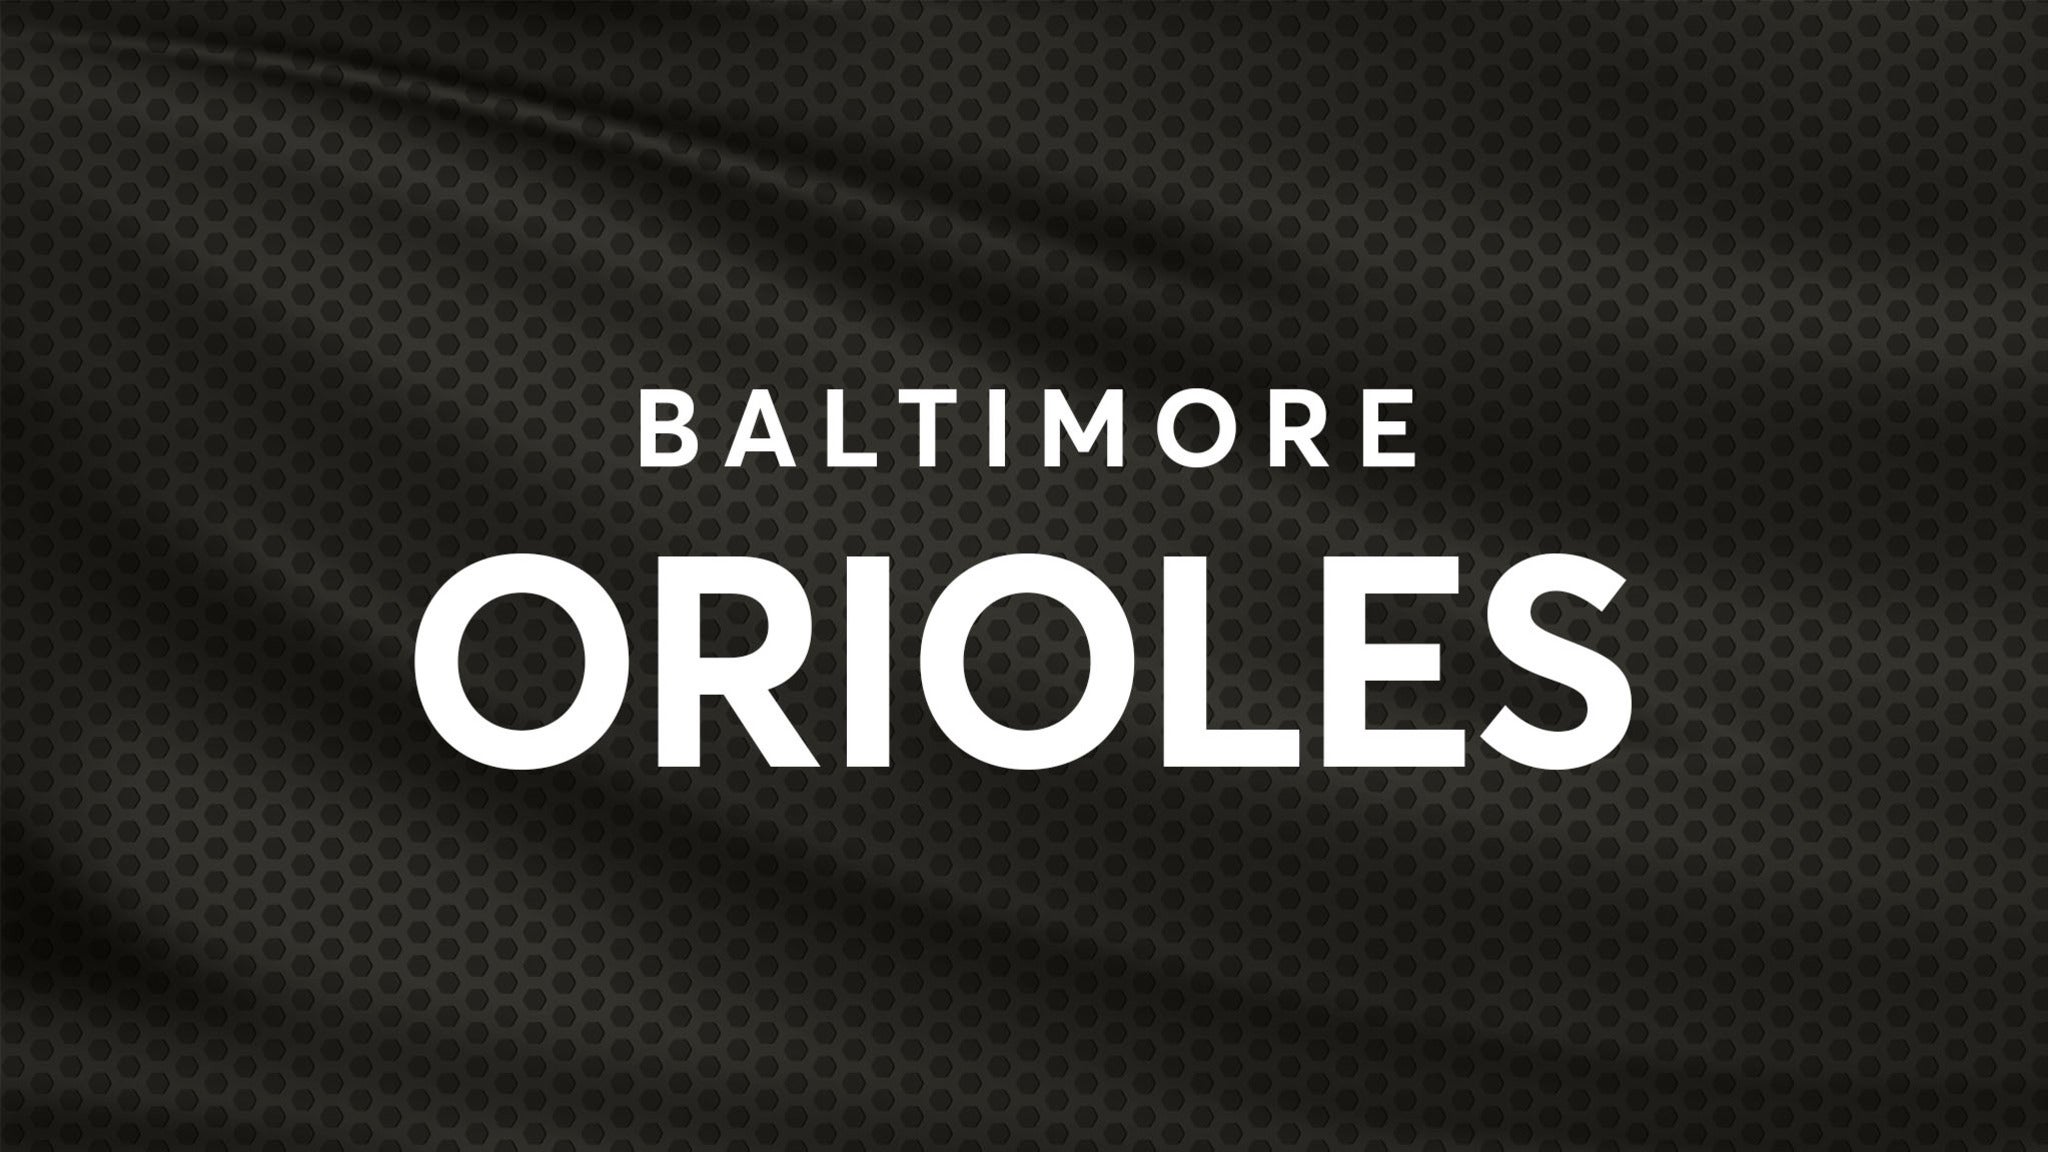 Baltimore Orioles vs. Chicago Cubs